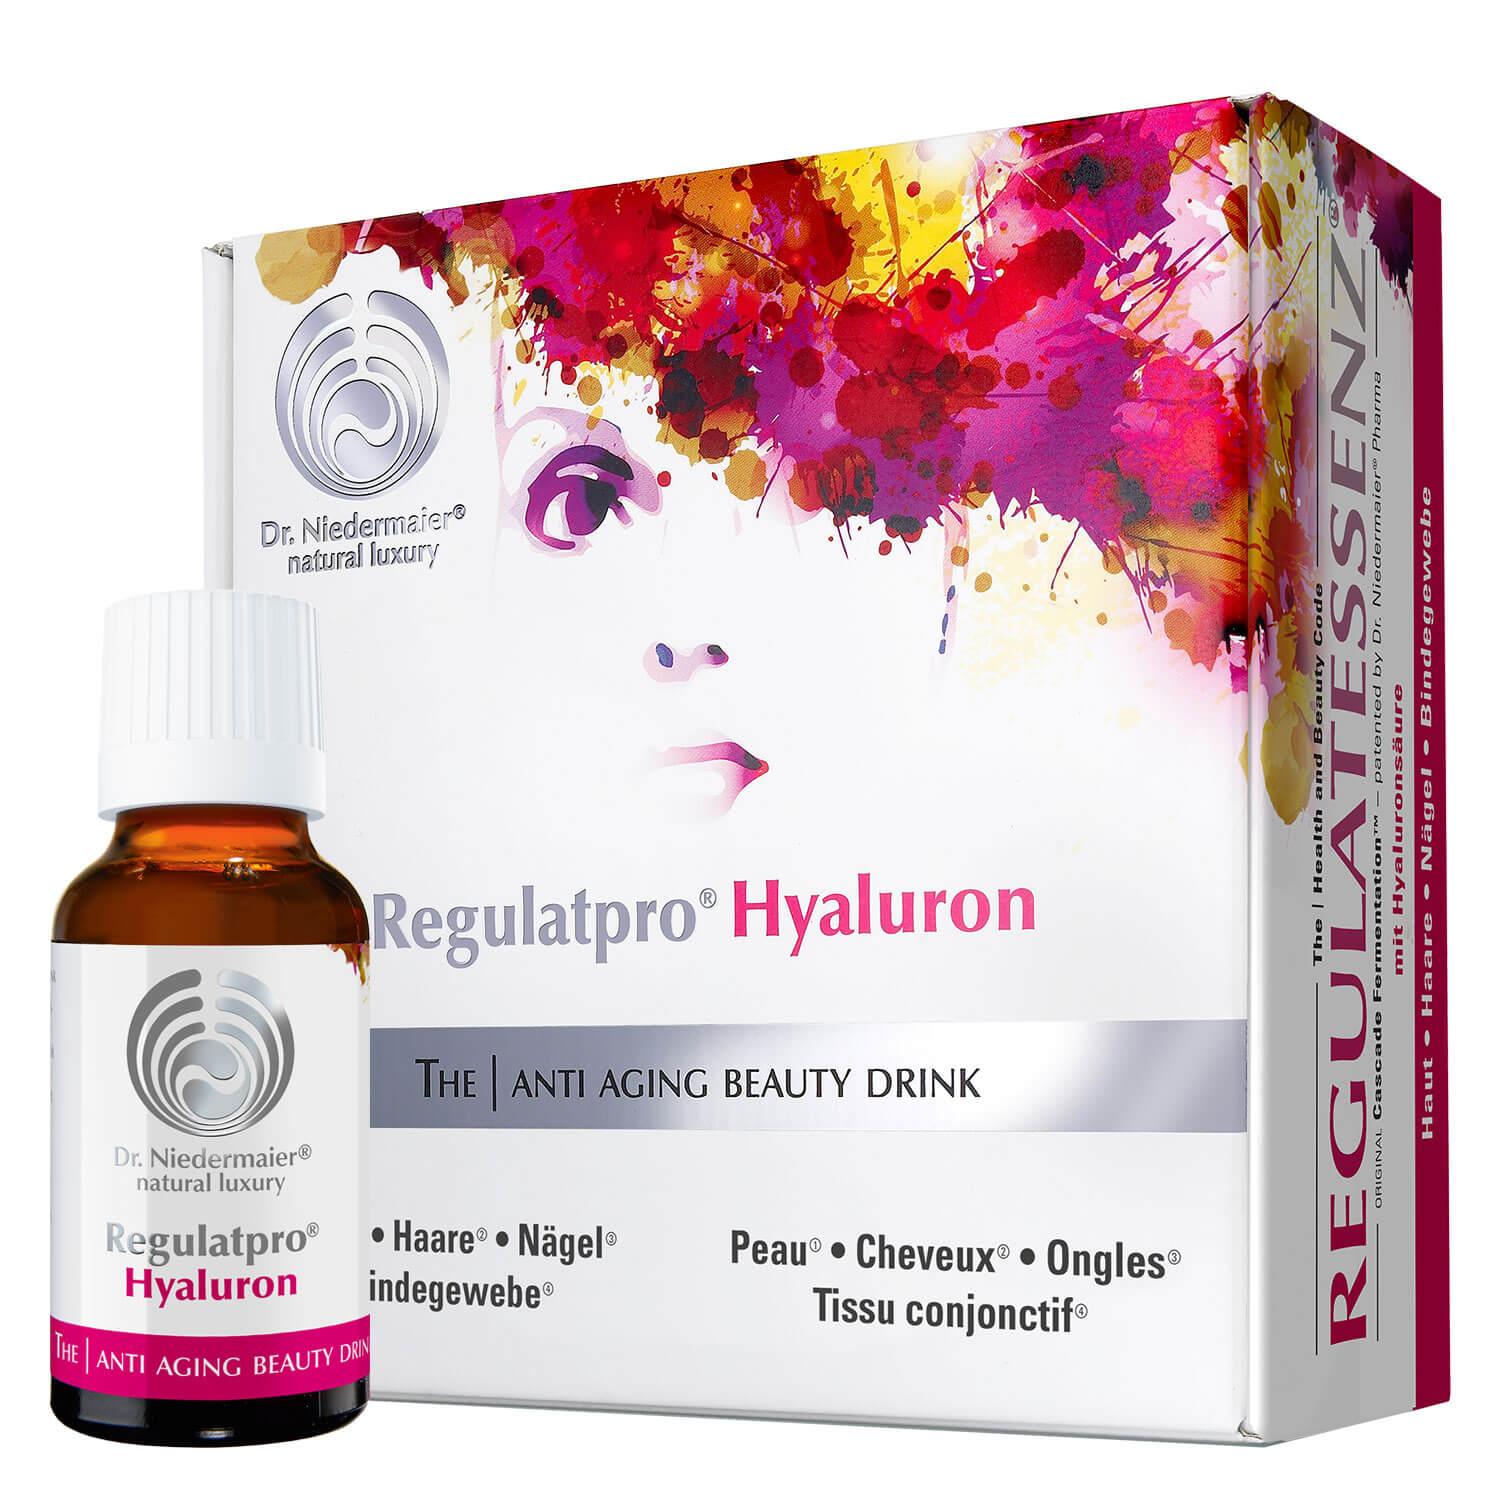 Regulatpro® - Hyaluron